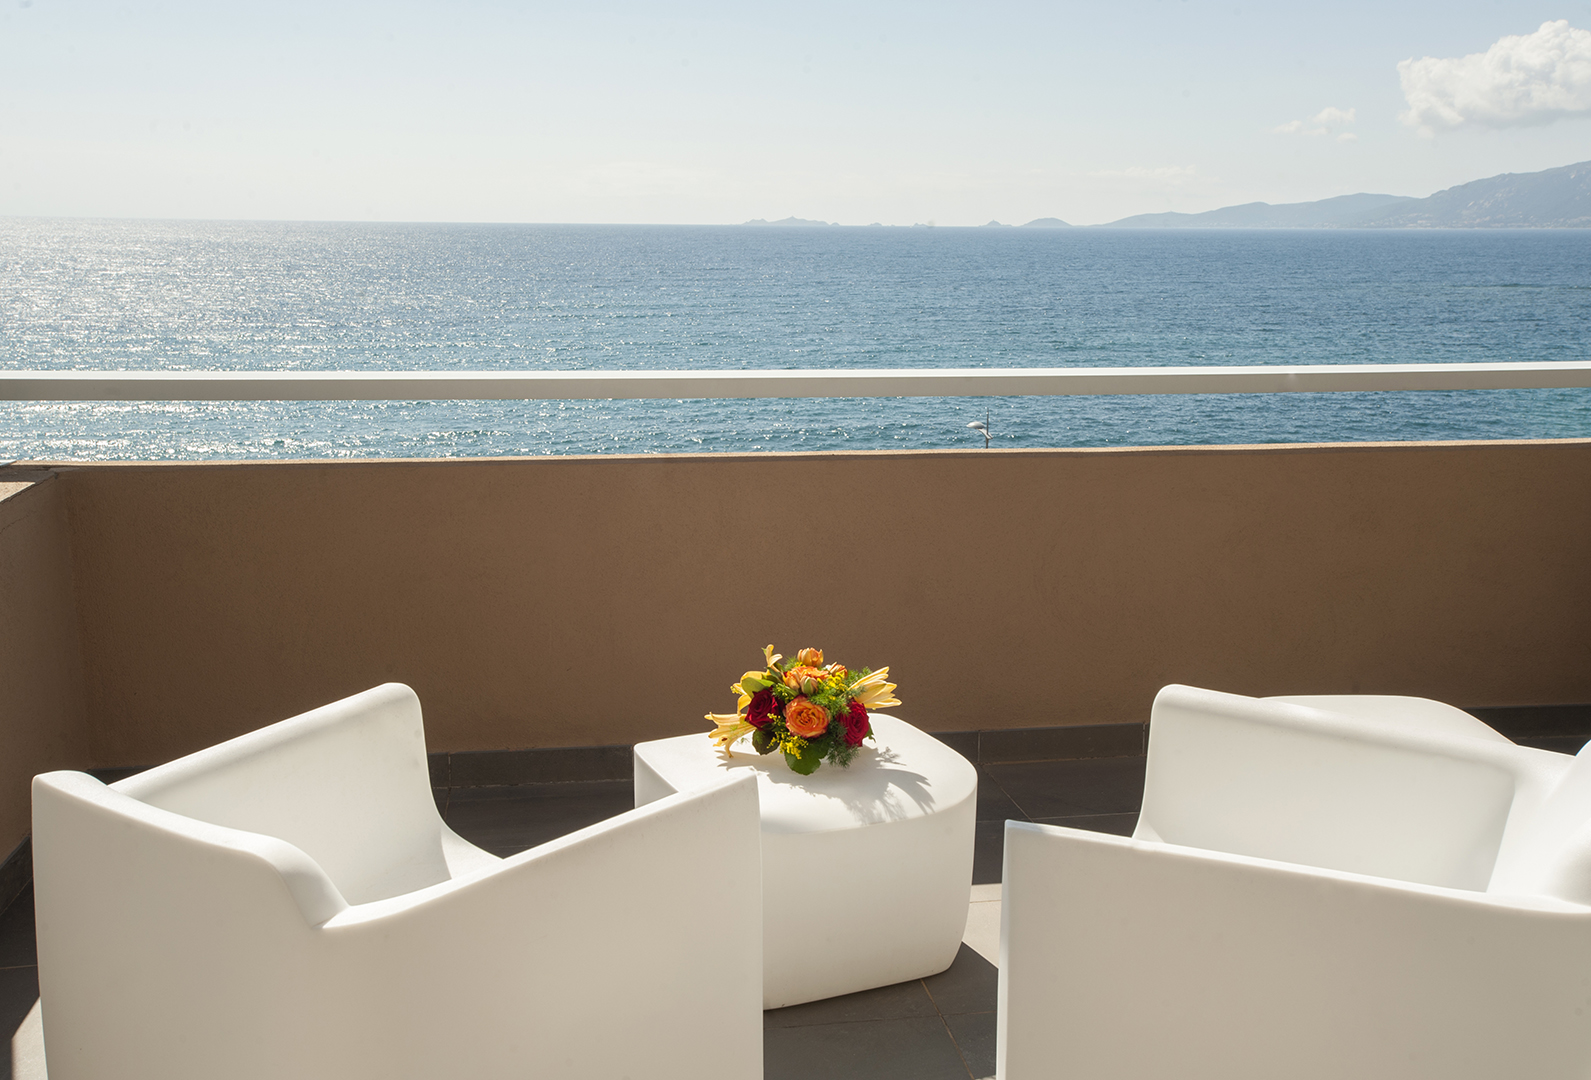 France - Corse - Porticcio - Hôtel Radisson Blu Resort & Spa 4* avec vols réguliers